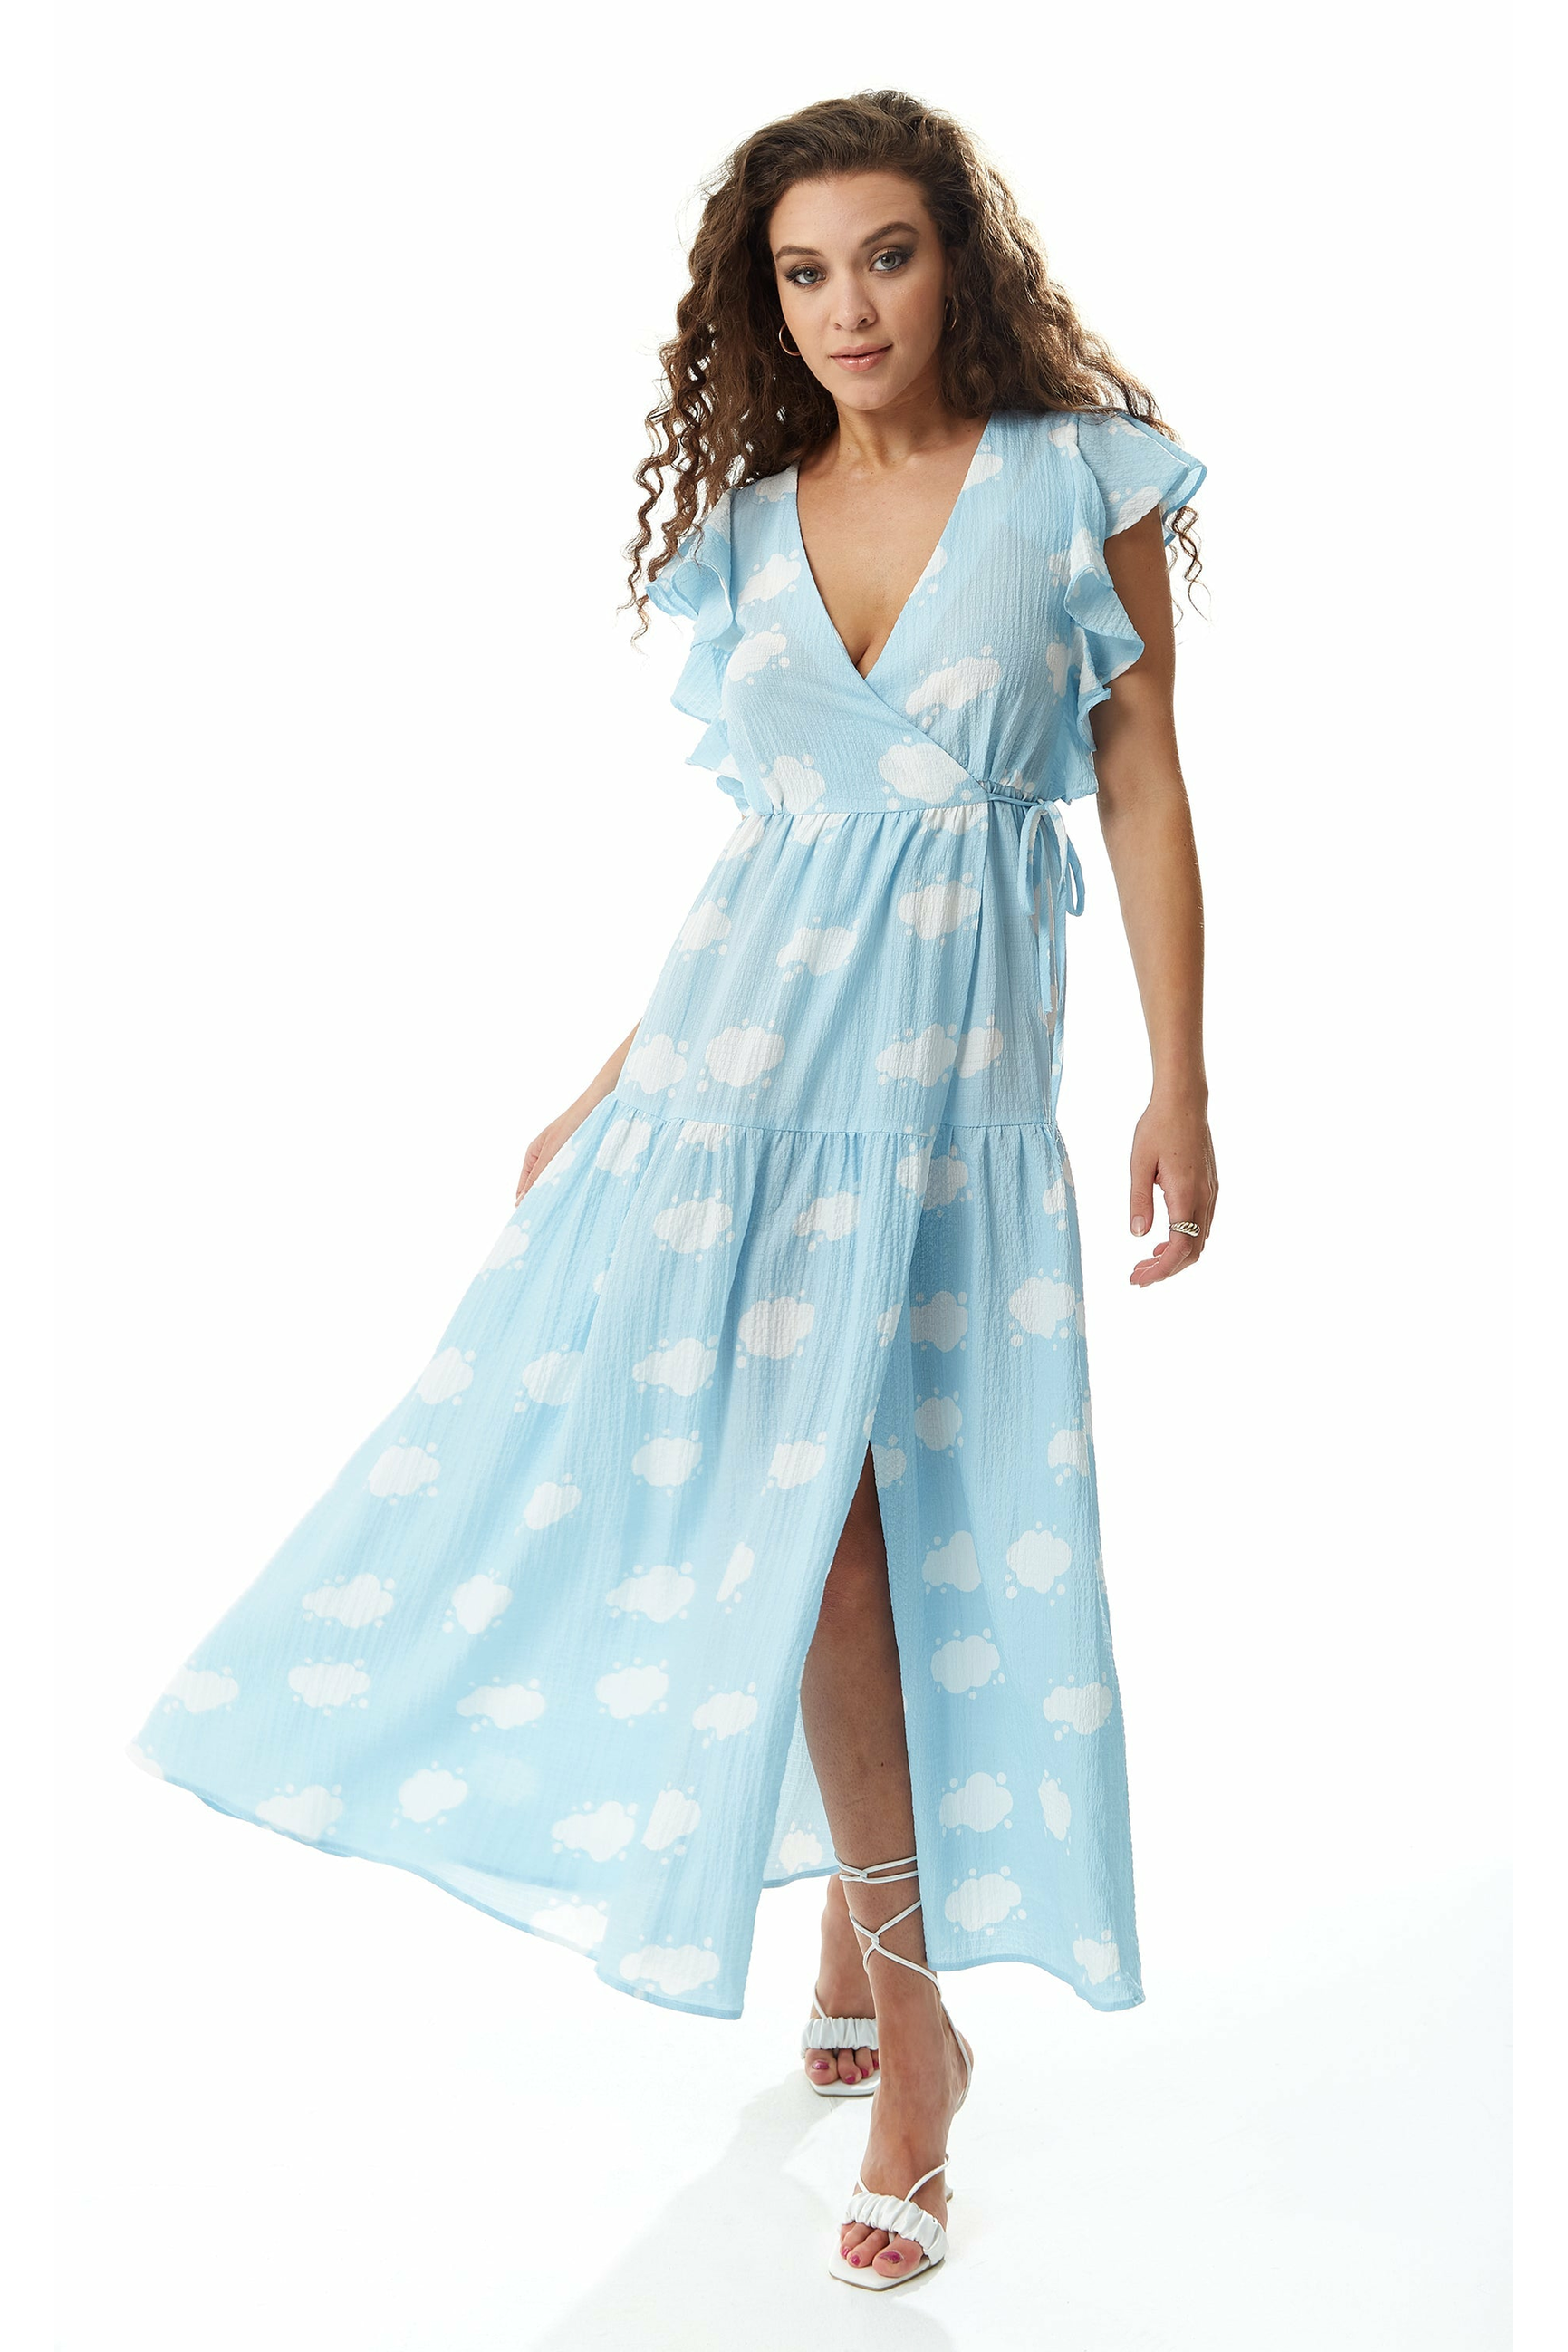 Liquorish cloud Print Midi Wrap Dress with Frill Sleeves in Blue Liquorish